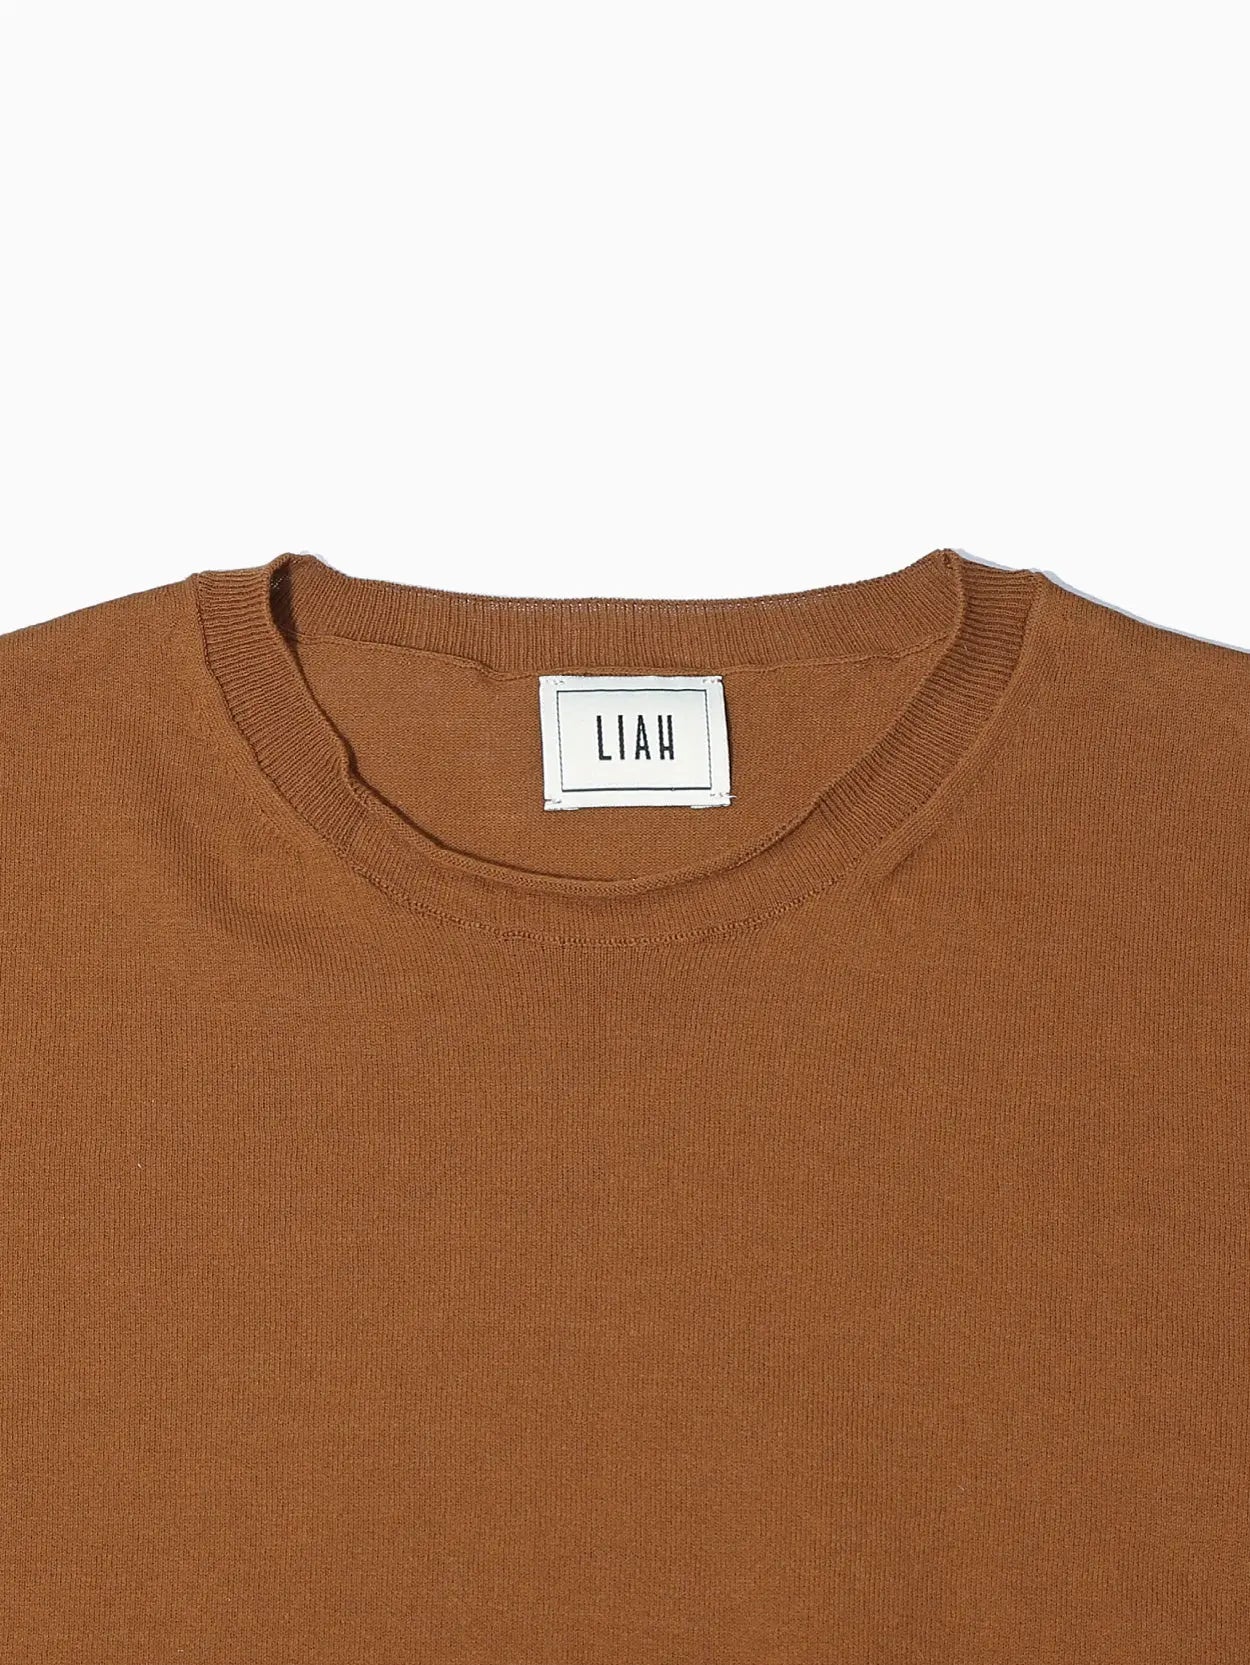 Giada T-Shirt Caramel Liah